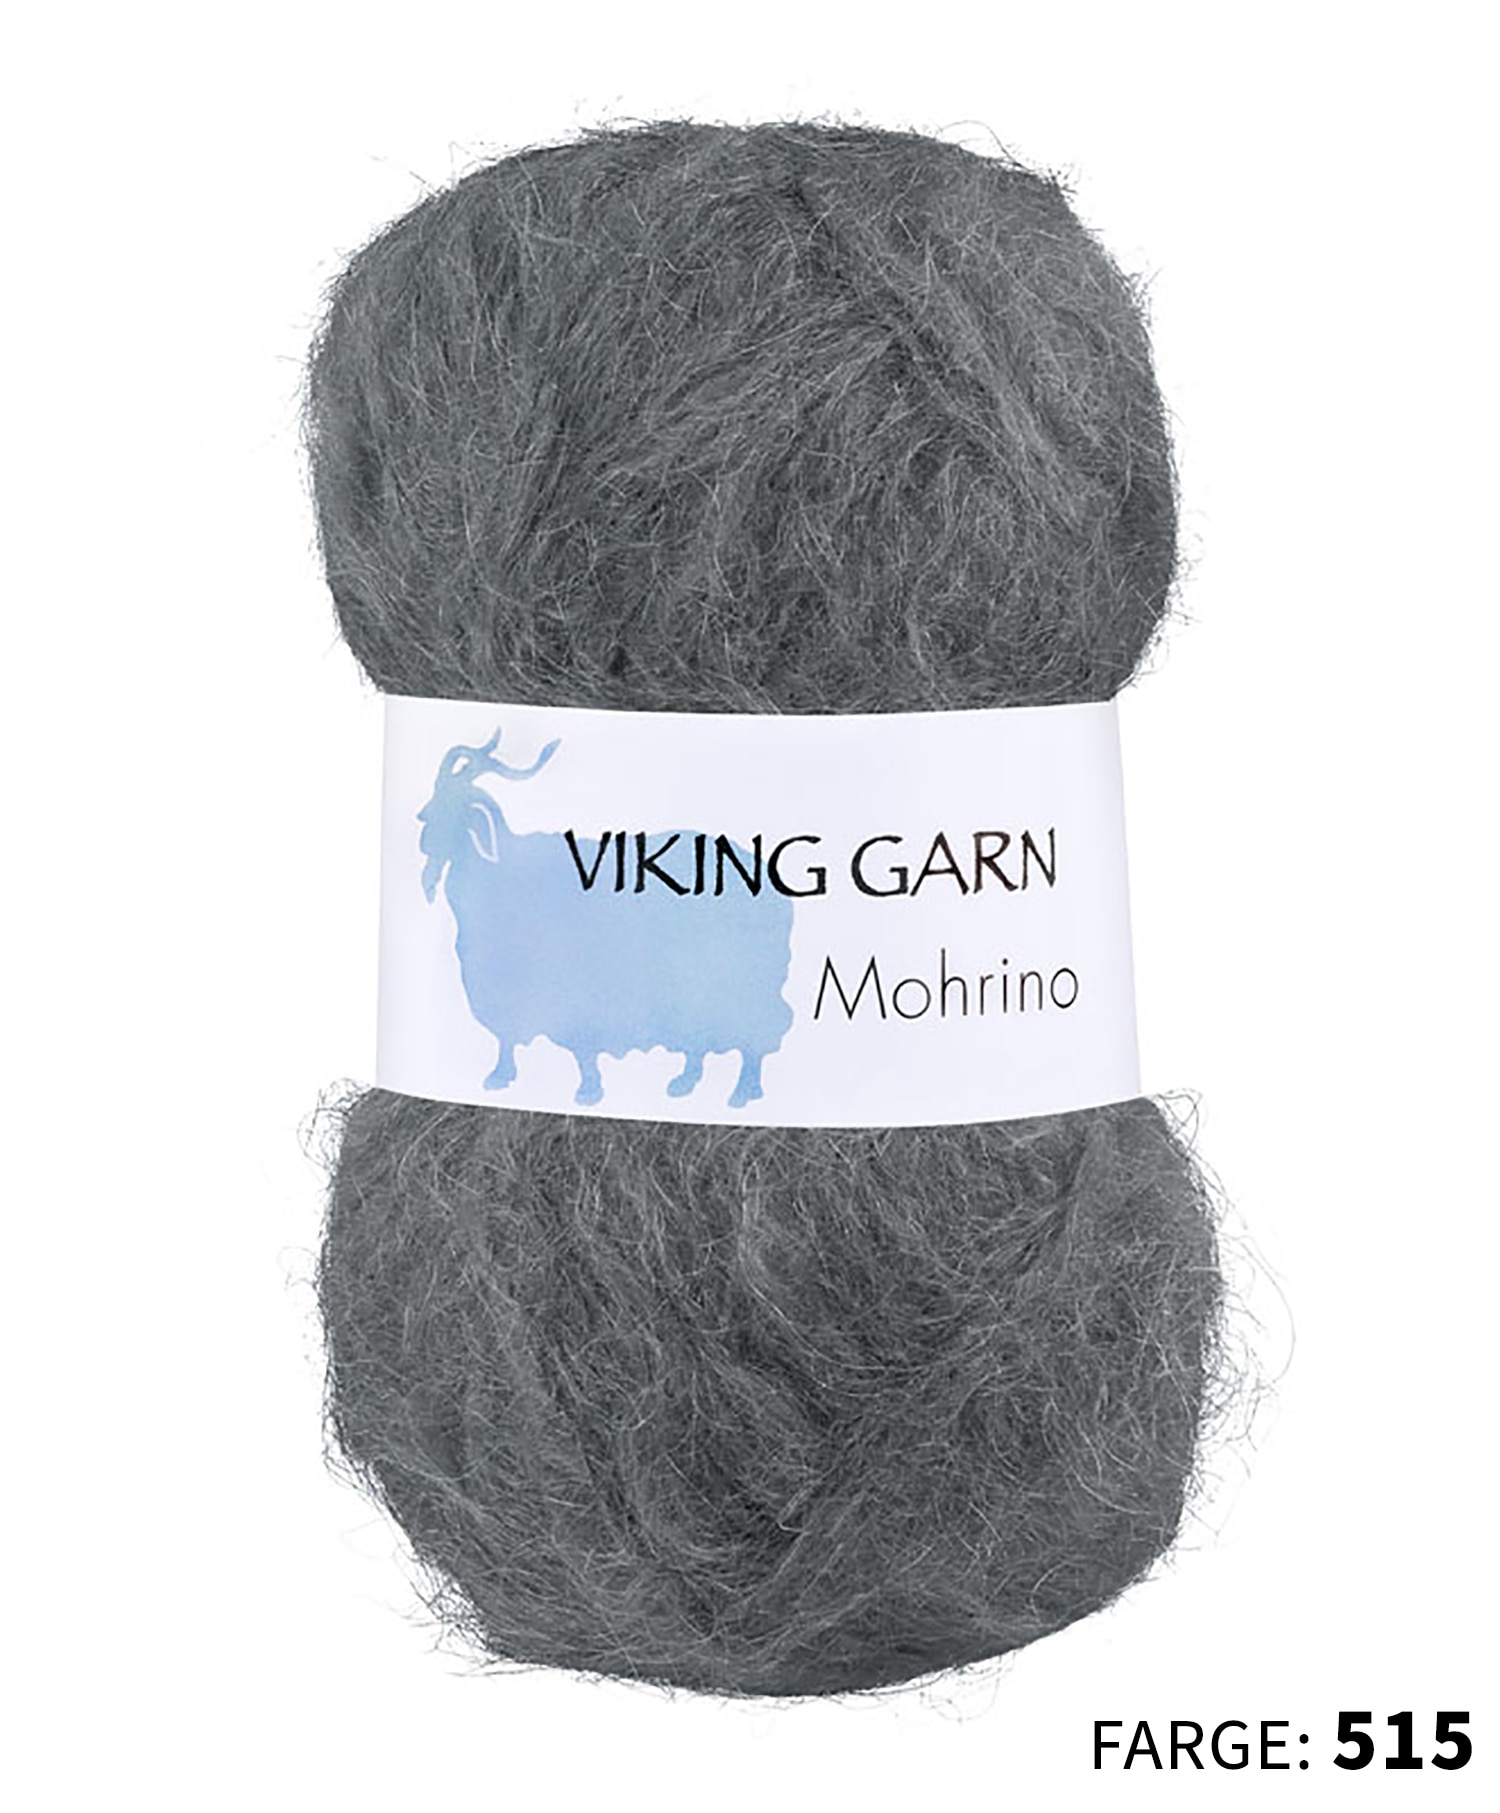 Viking Garn Mohrino